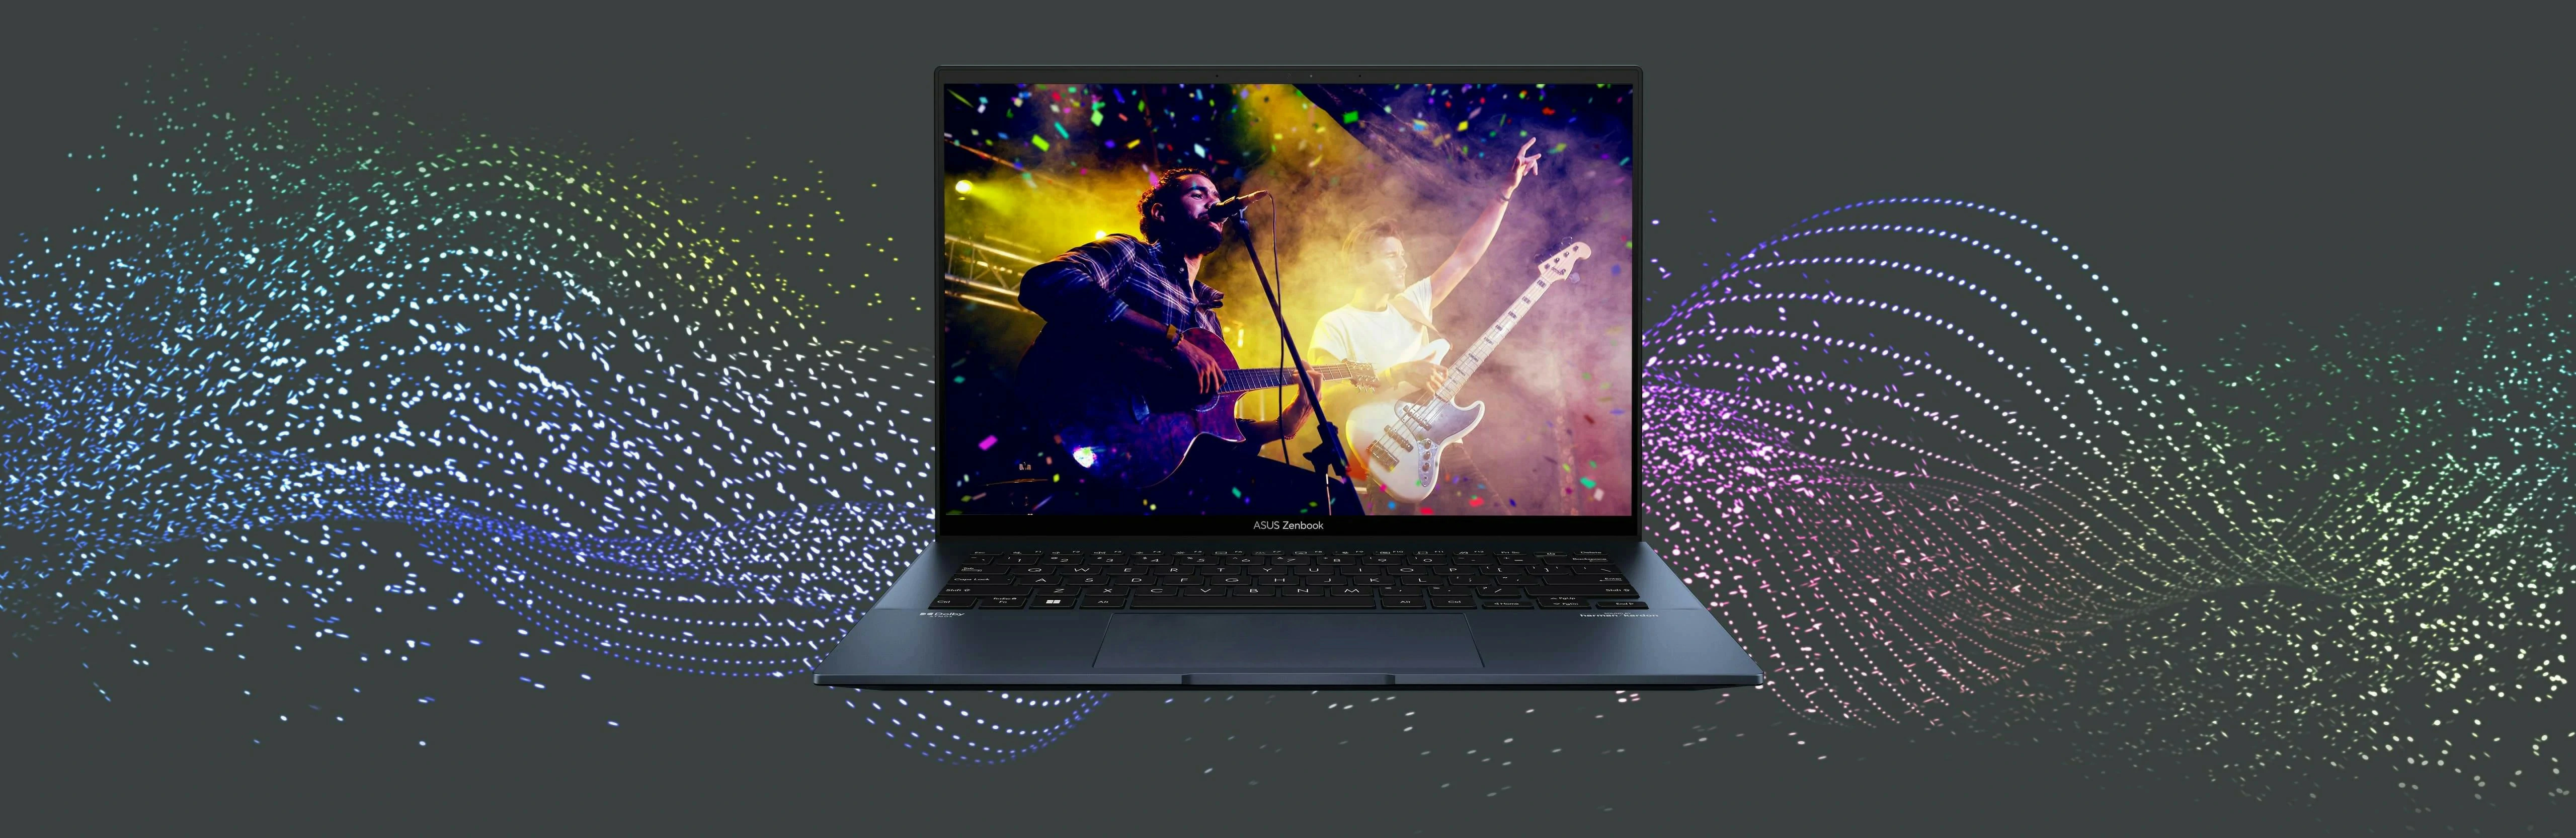 Zenbook 14 OLED 画面上呈现音乐表演者的图片。笔电周围环绕着五颜六色的声波。